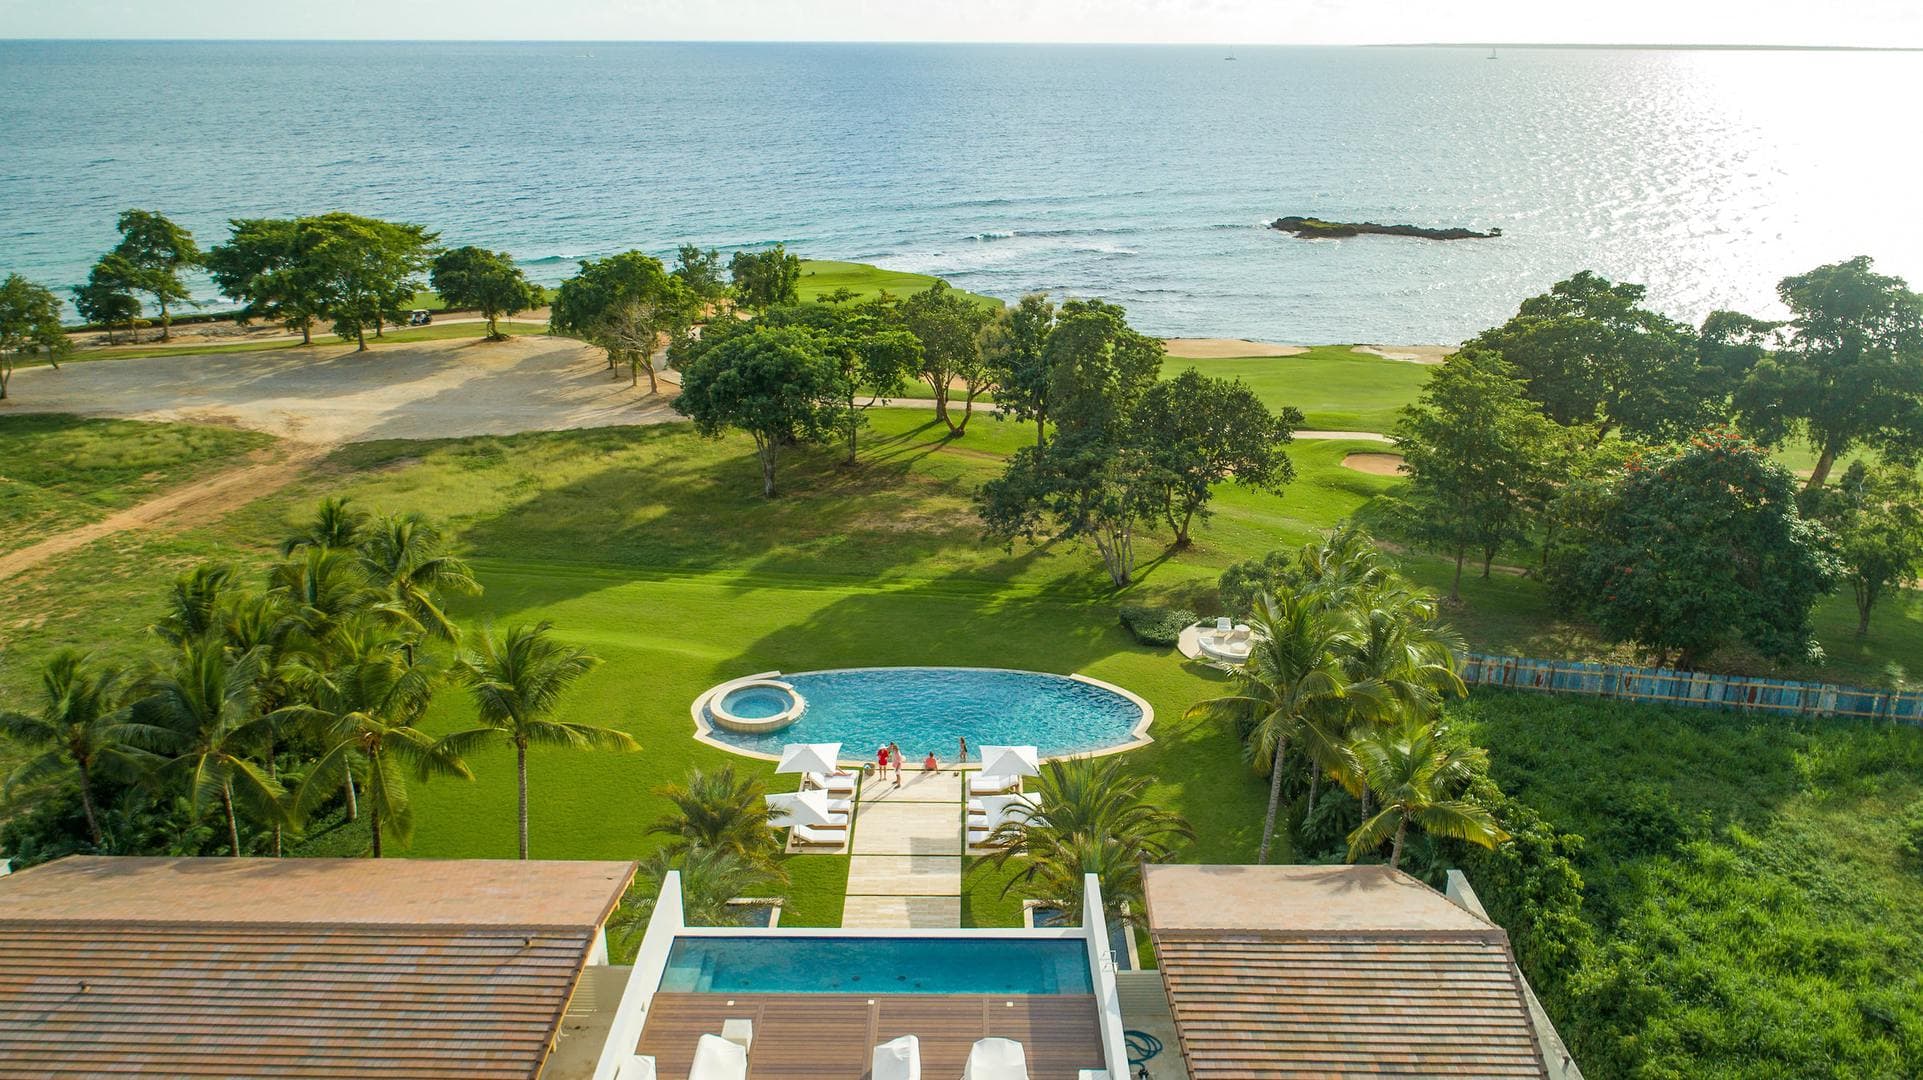 Casa de Campo Villa Exterior With Pool, Ocean View, and Lounge Area